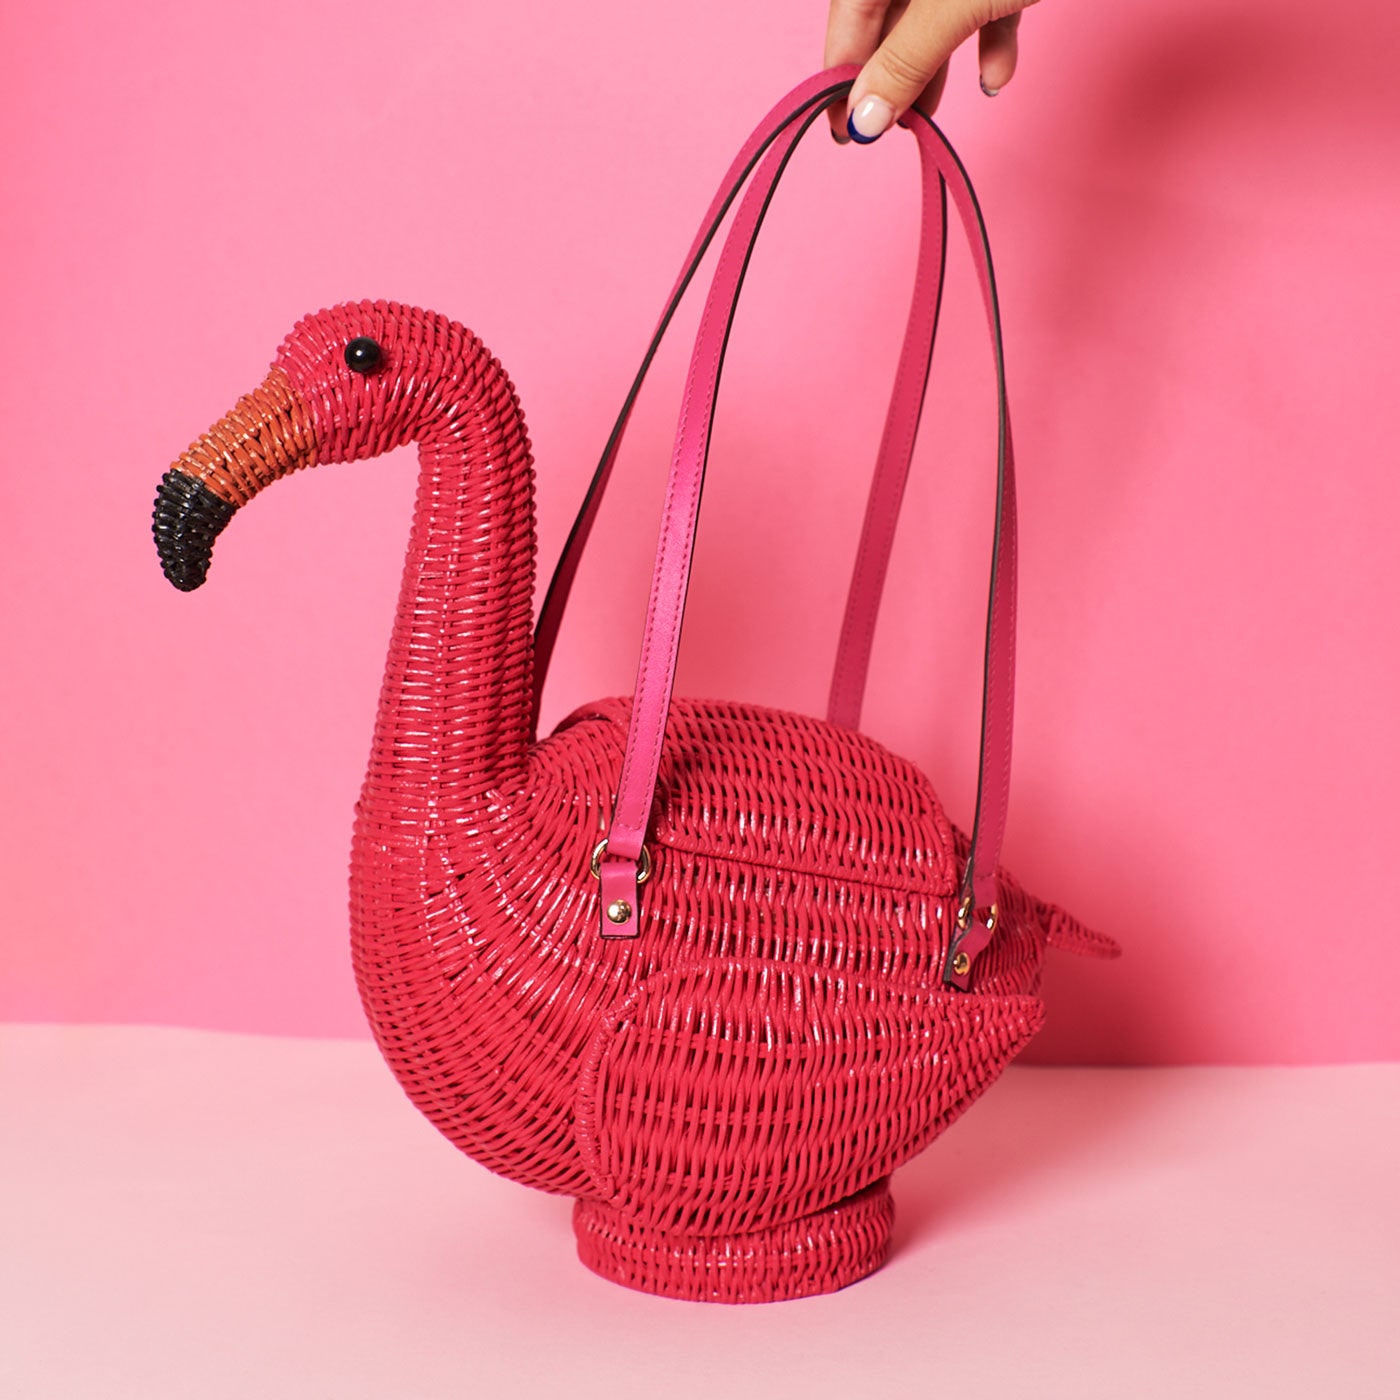 Wicker Darling's Flamenco the flamingo purse